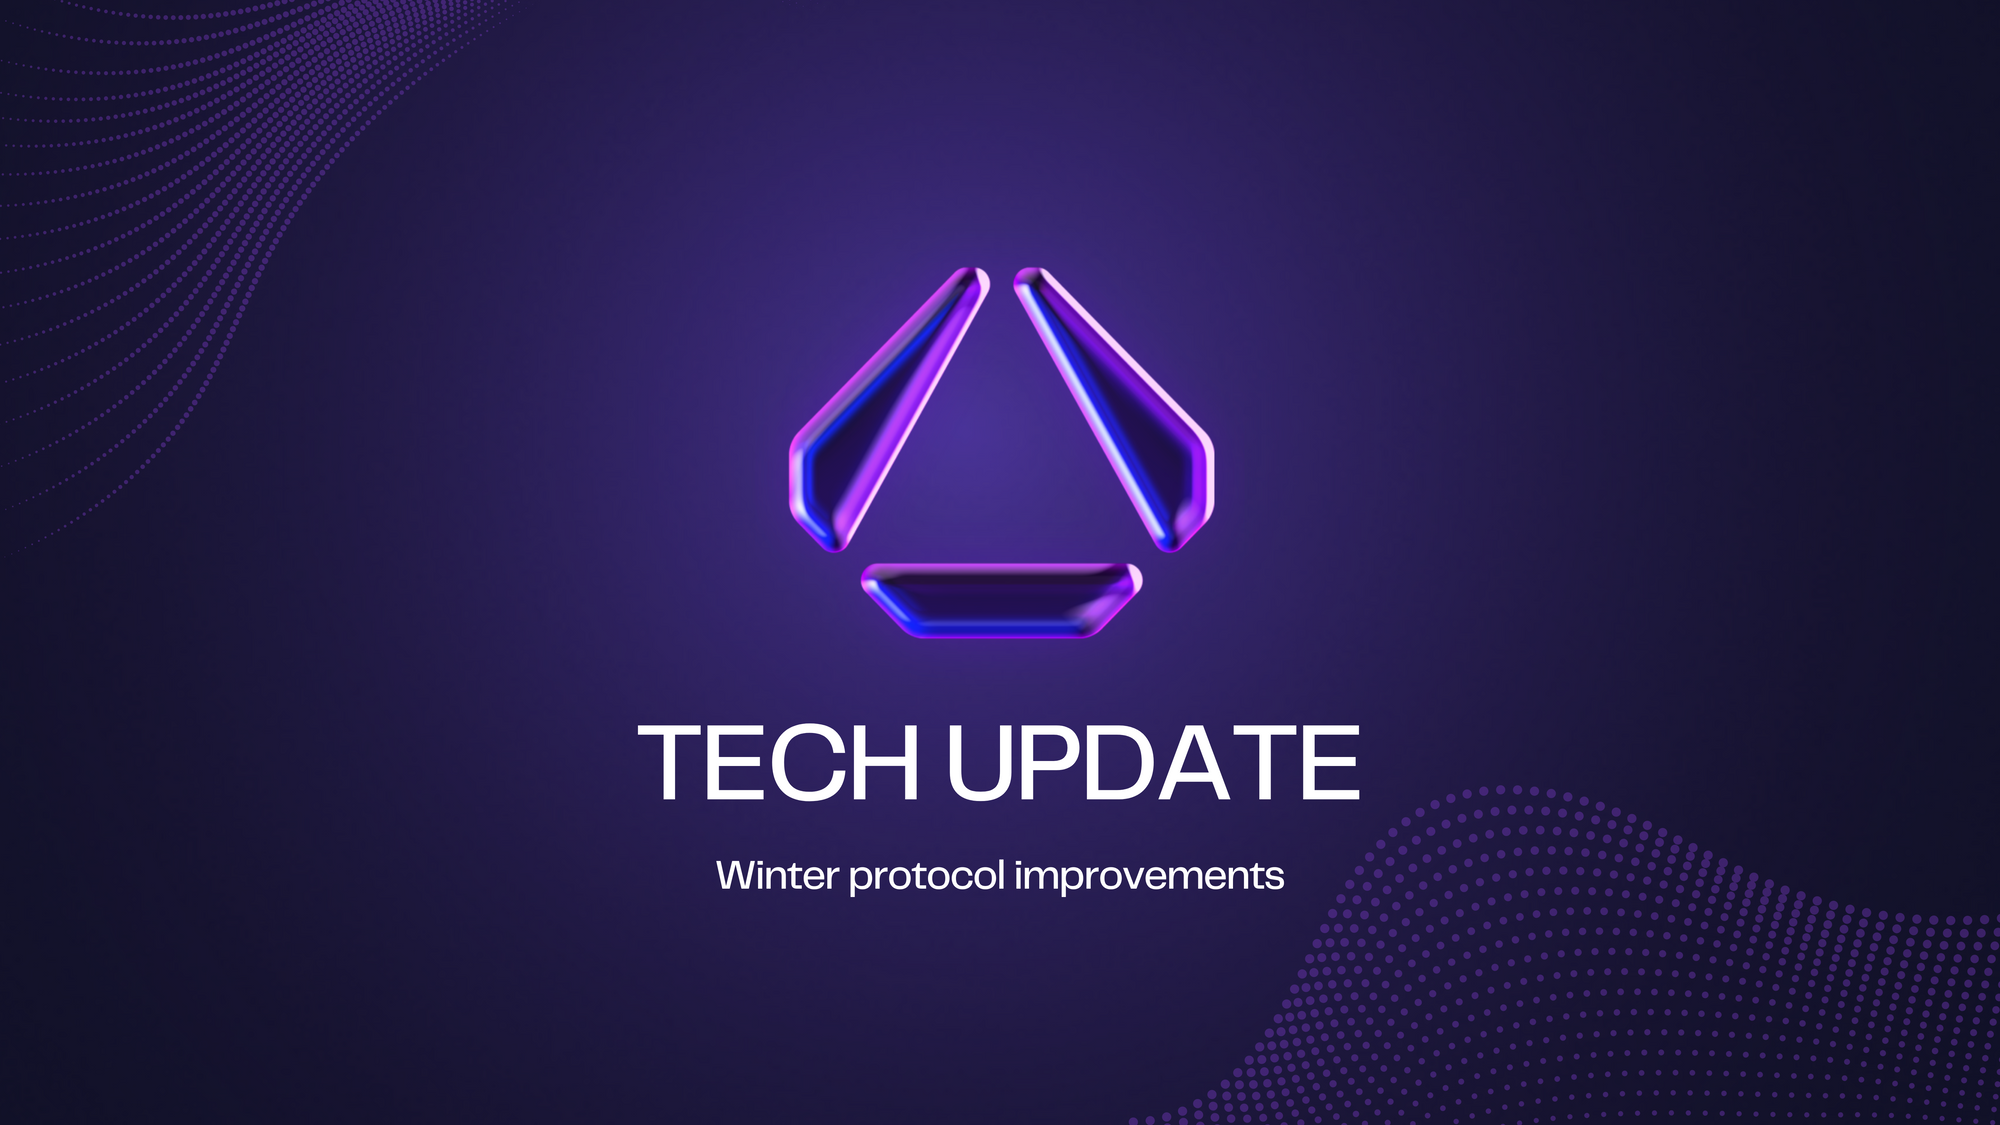 Winter protocol improvements - Tech Update